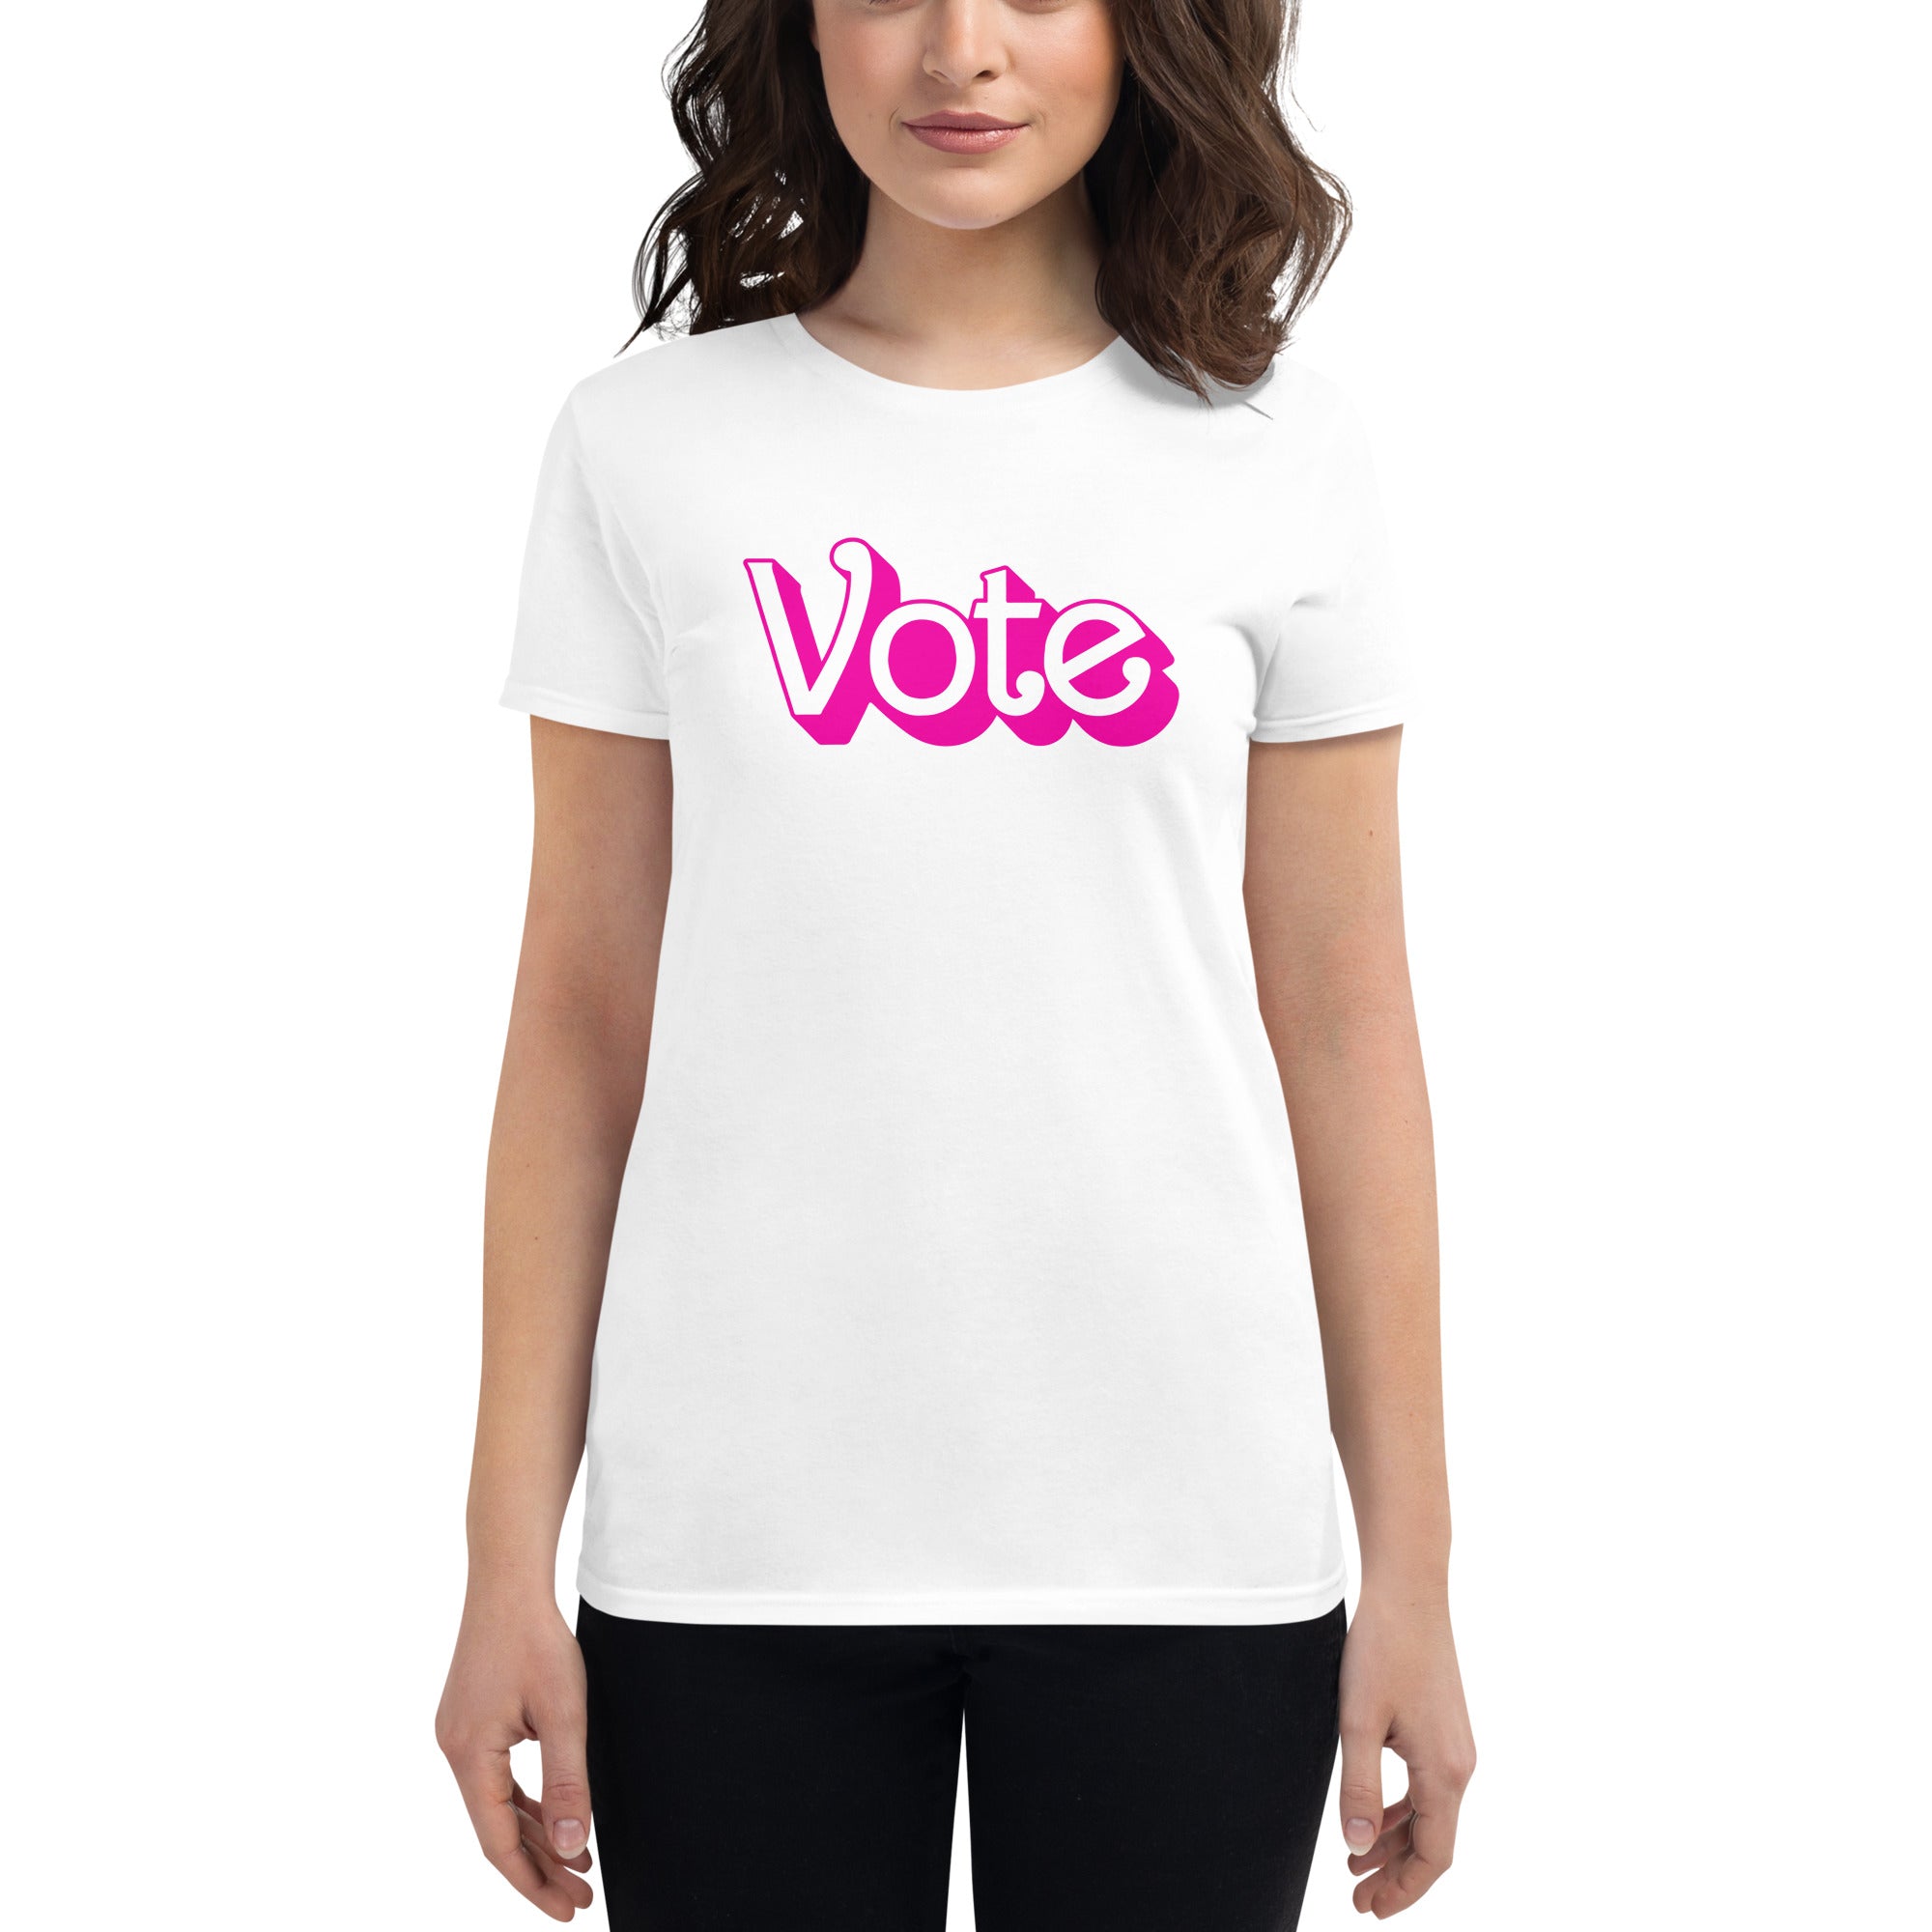 VOTE PINK- Women's short sleeve t-shirt